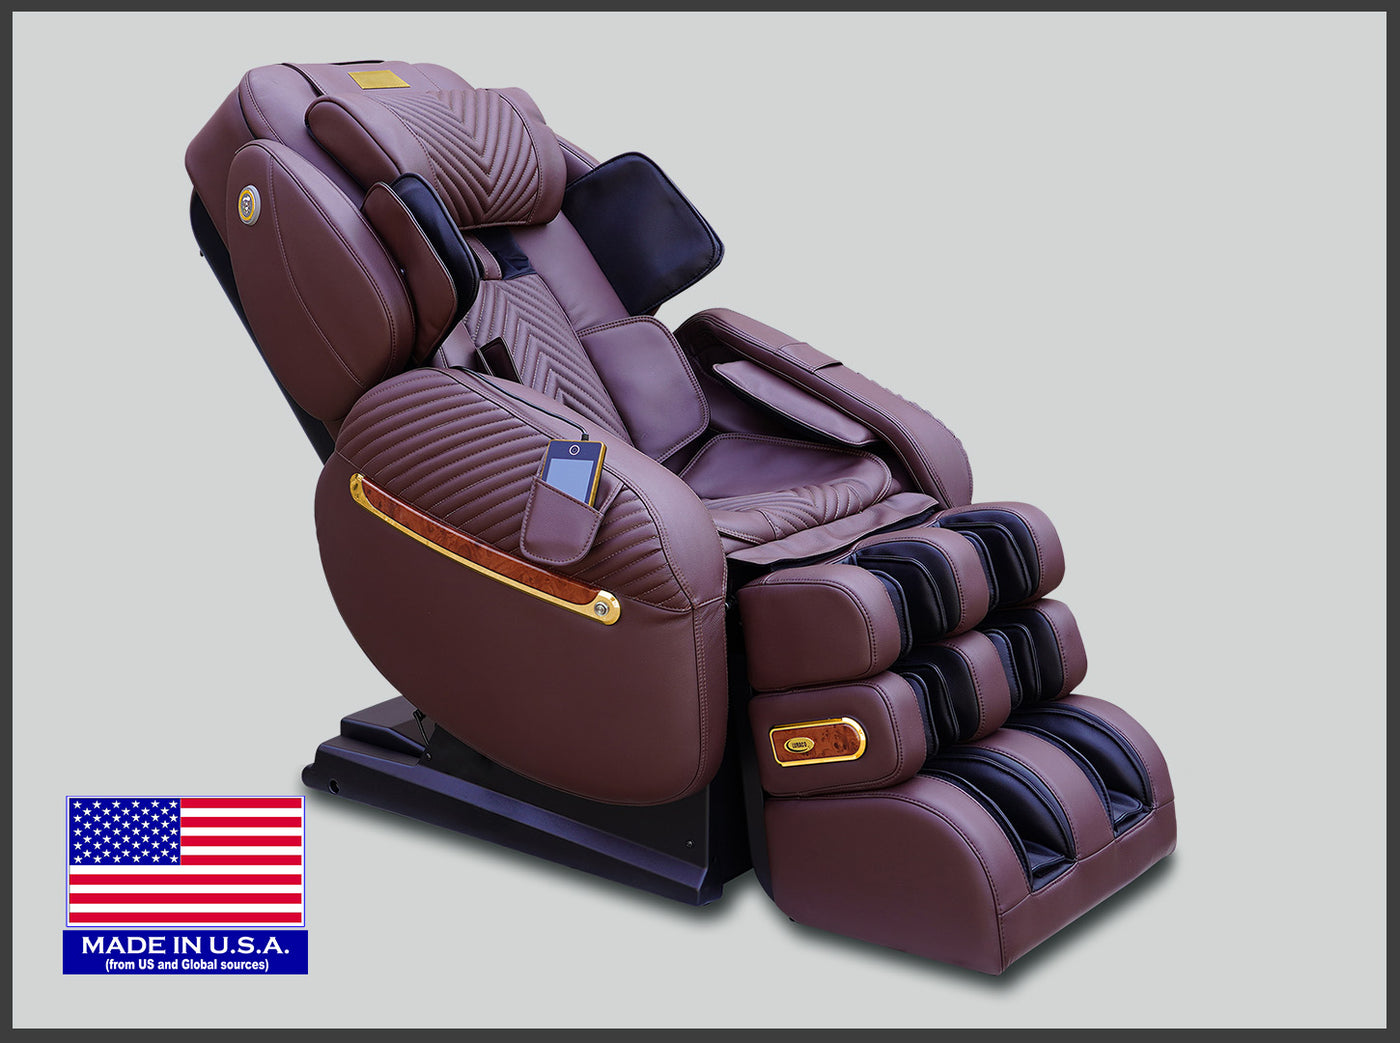 Luraco iRobotics 9 MAX Royal Edition Medical Massage Chair